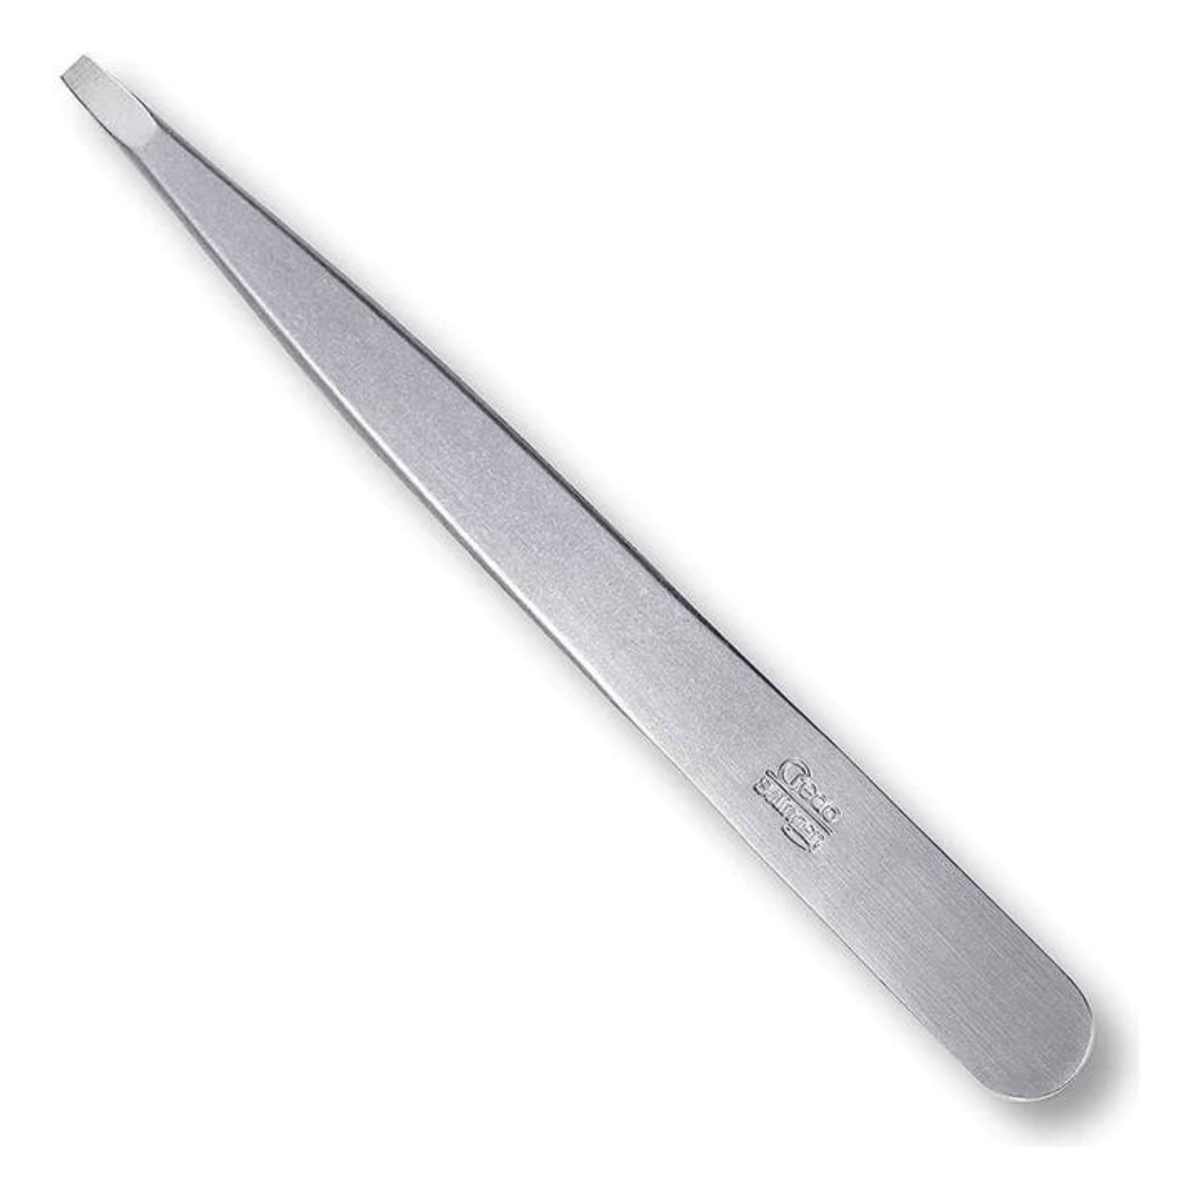 Primary Image of Stainless Steel Straight Tweezers 9cm